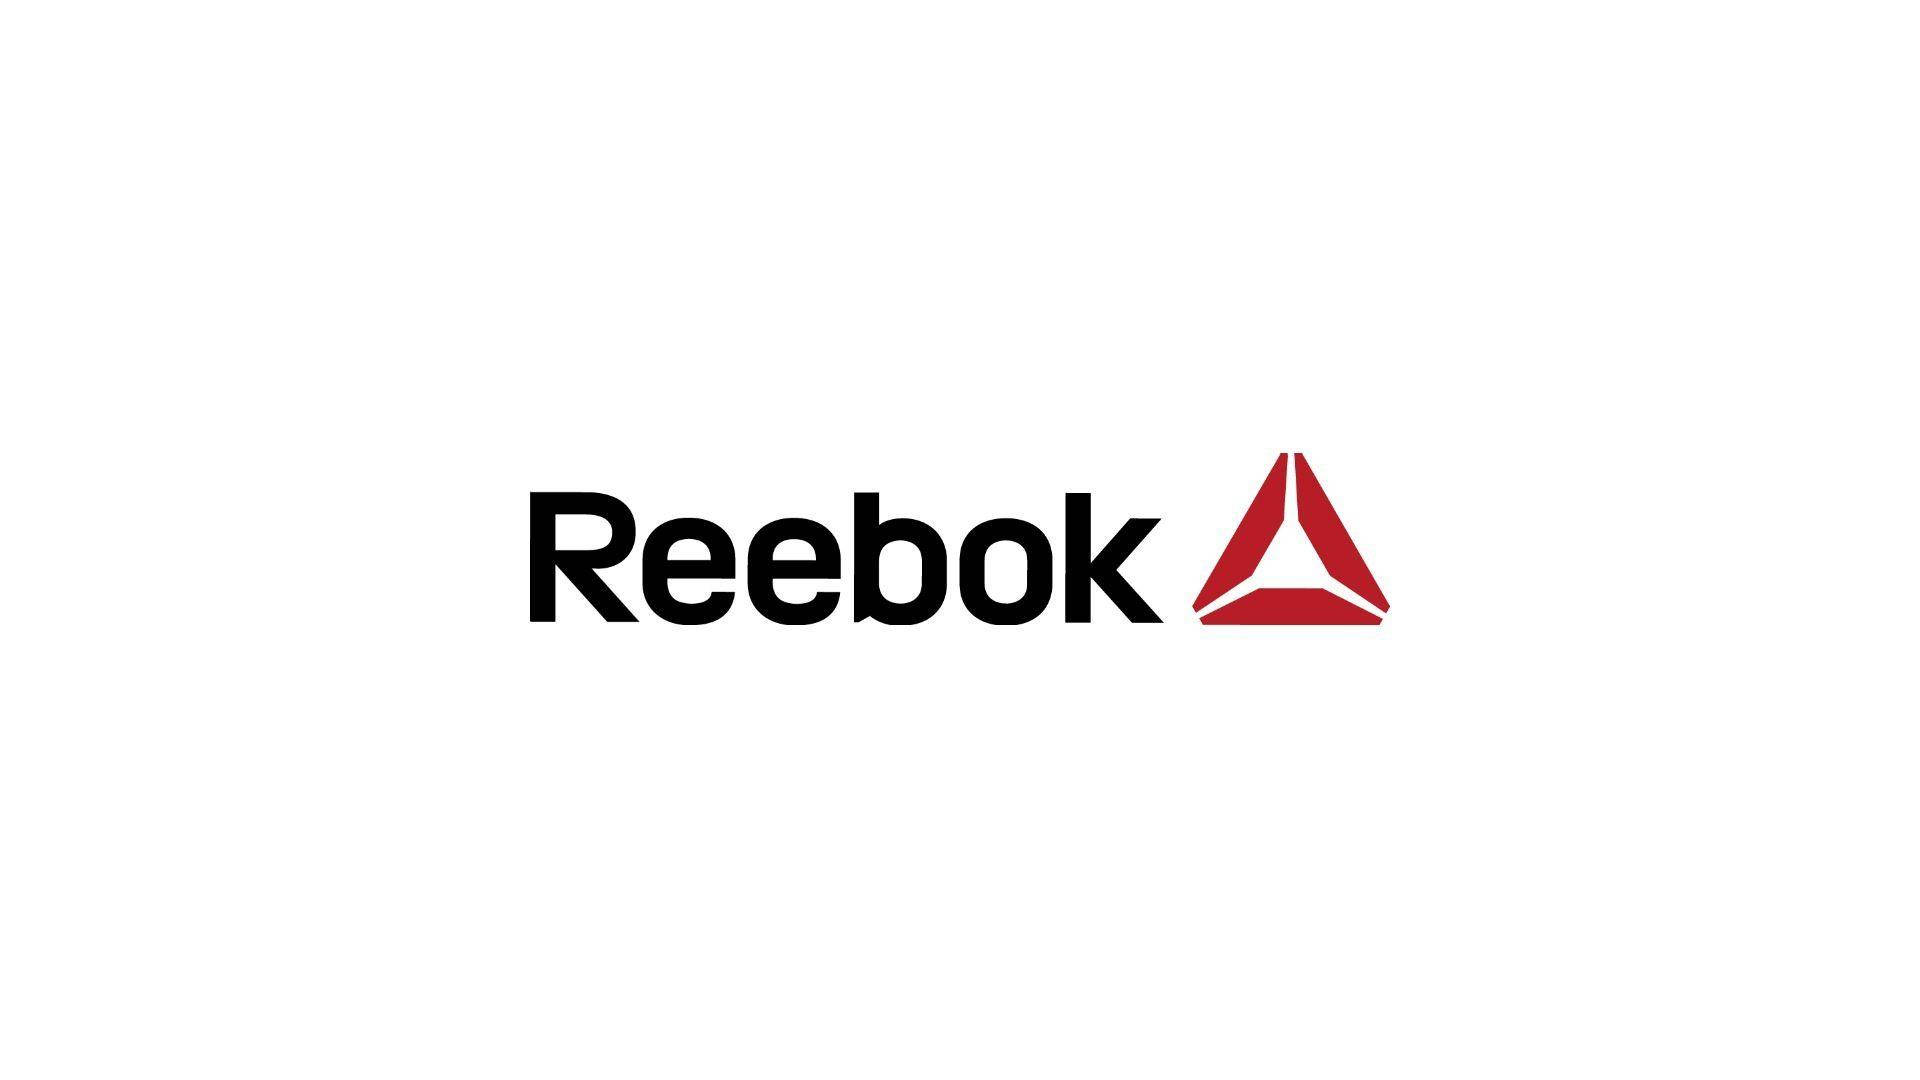 Reebok Background Photos